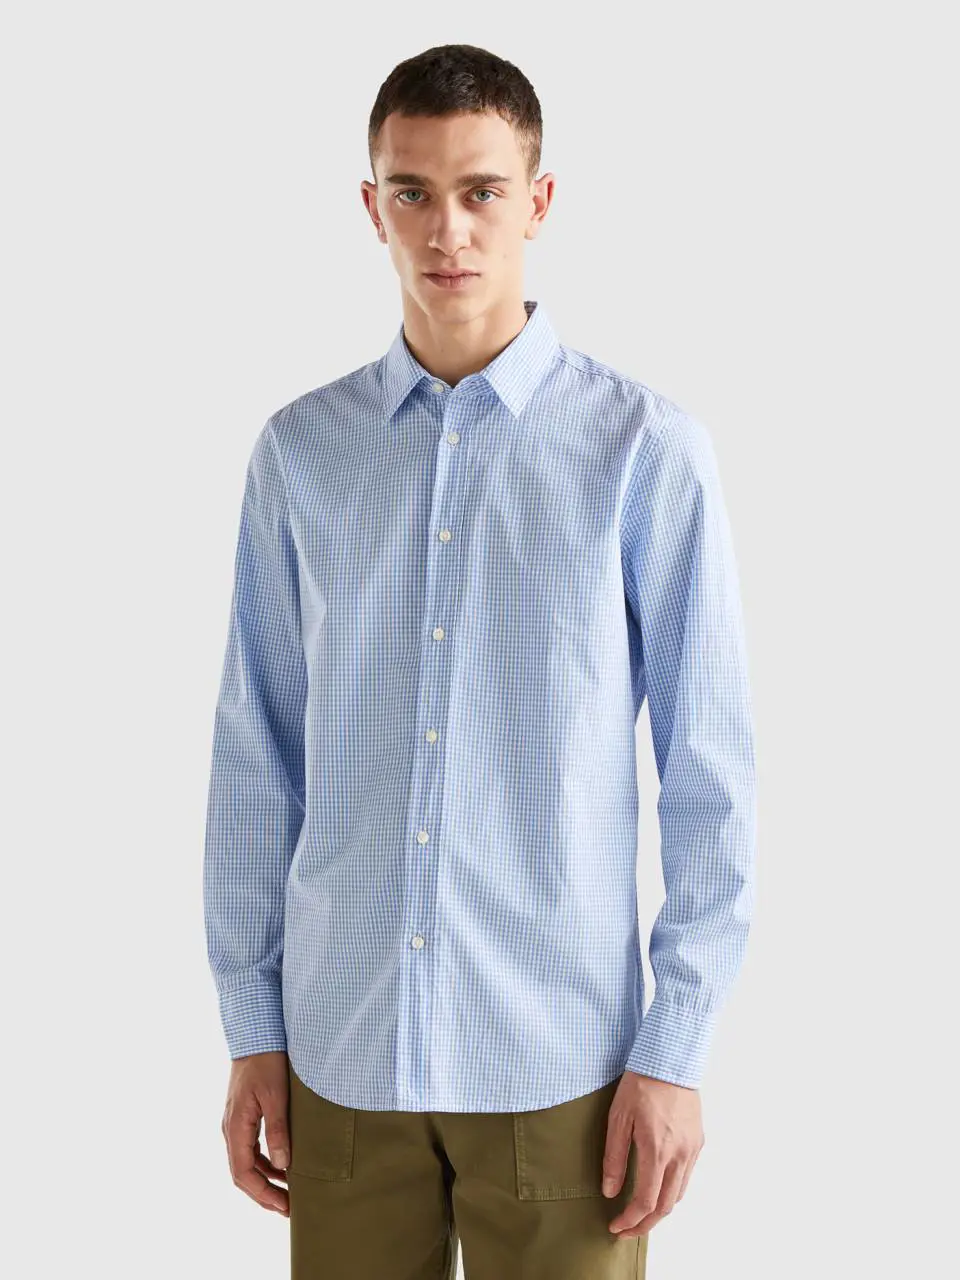 Benetton 100% organic cotton patterned shirt. 1